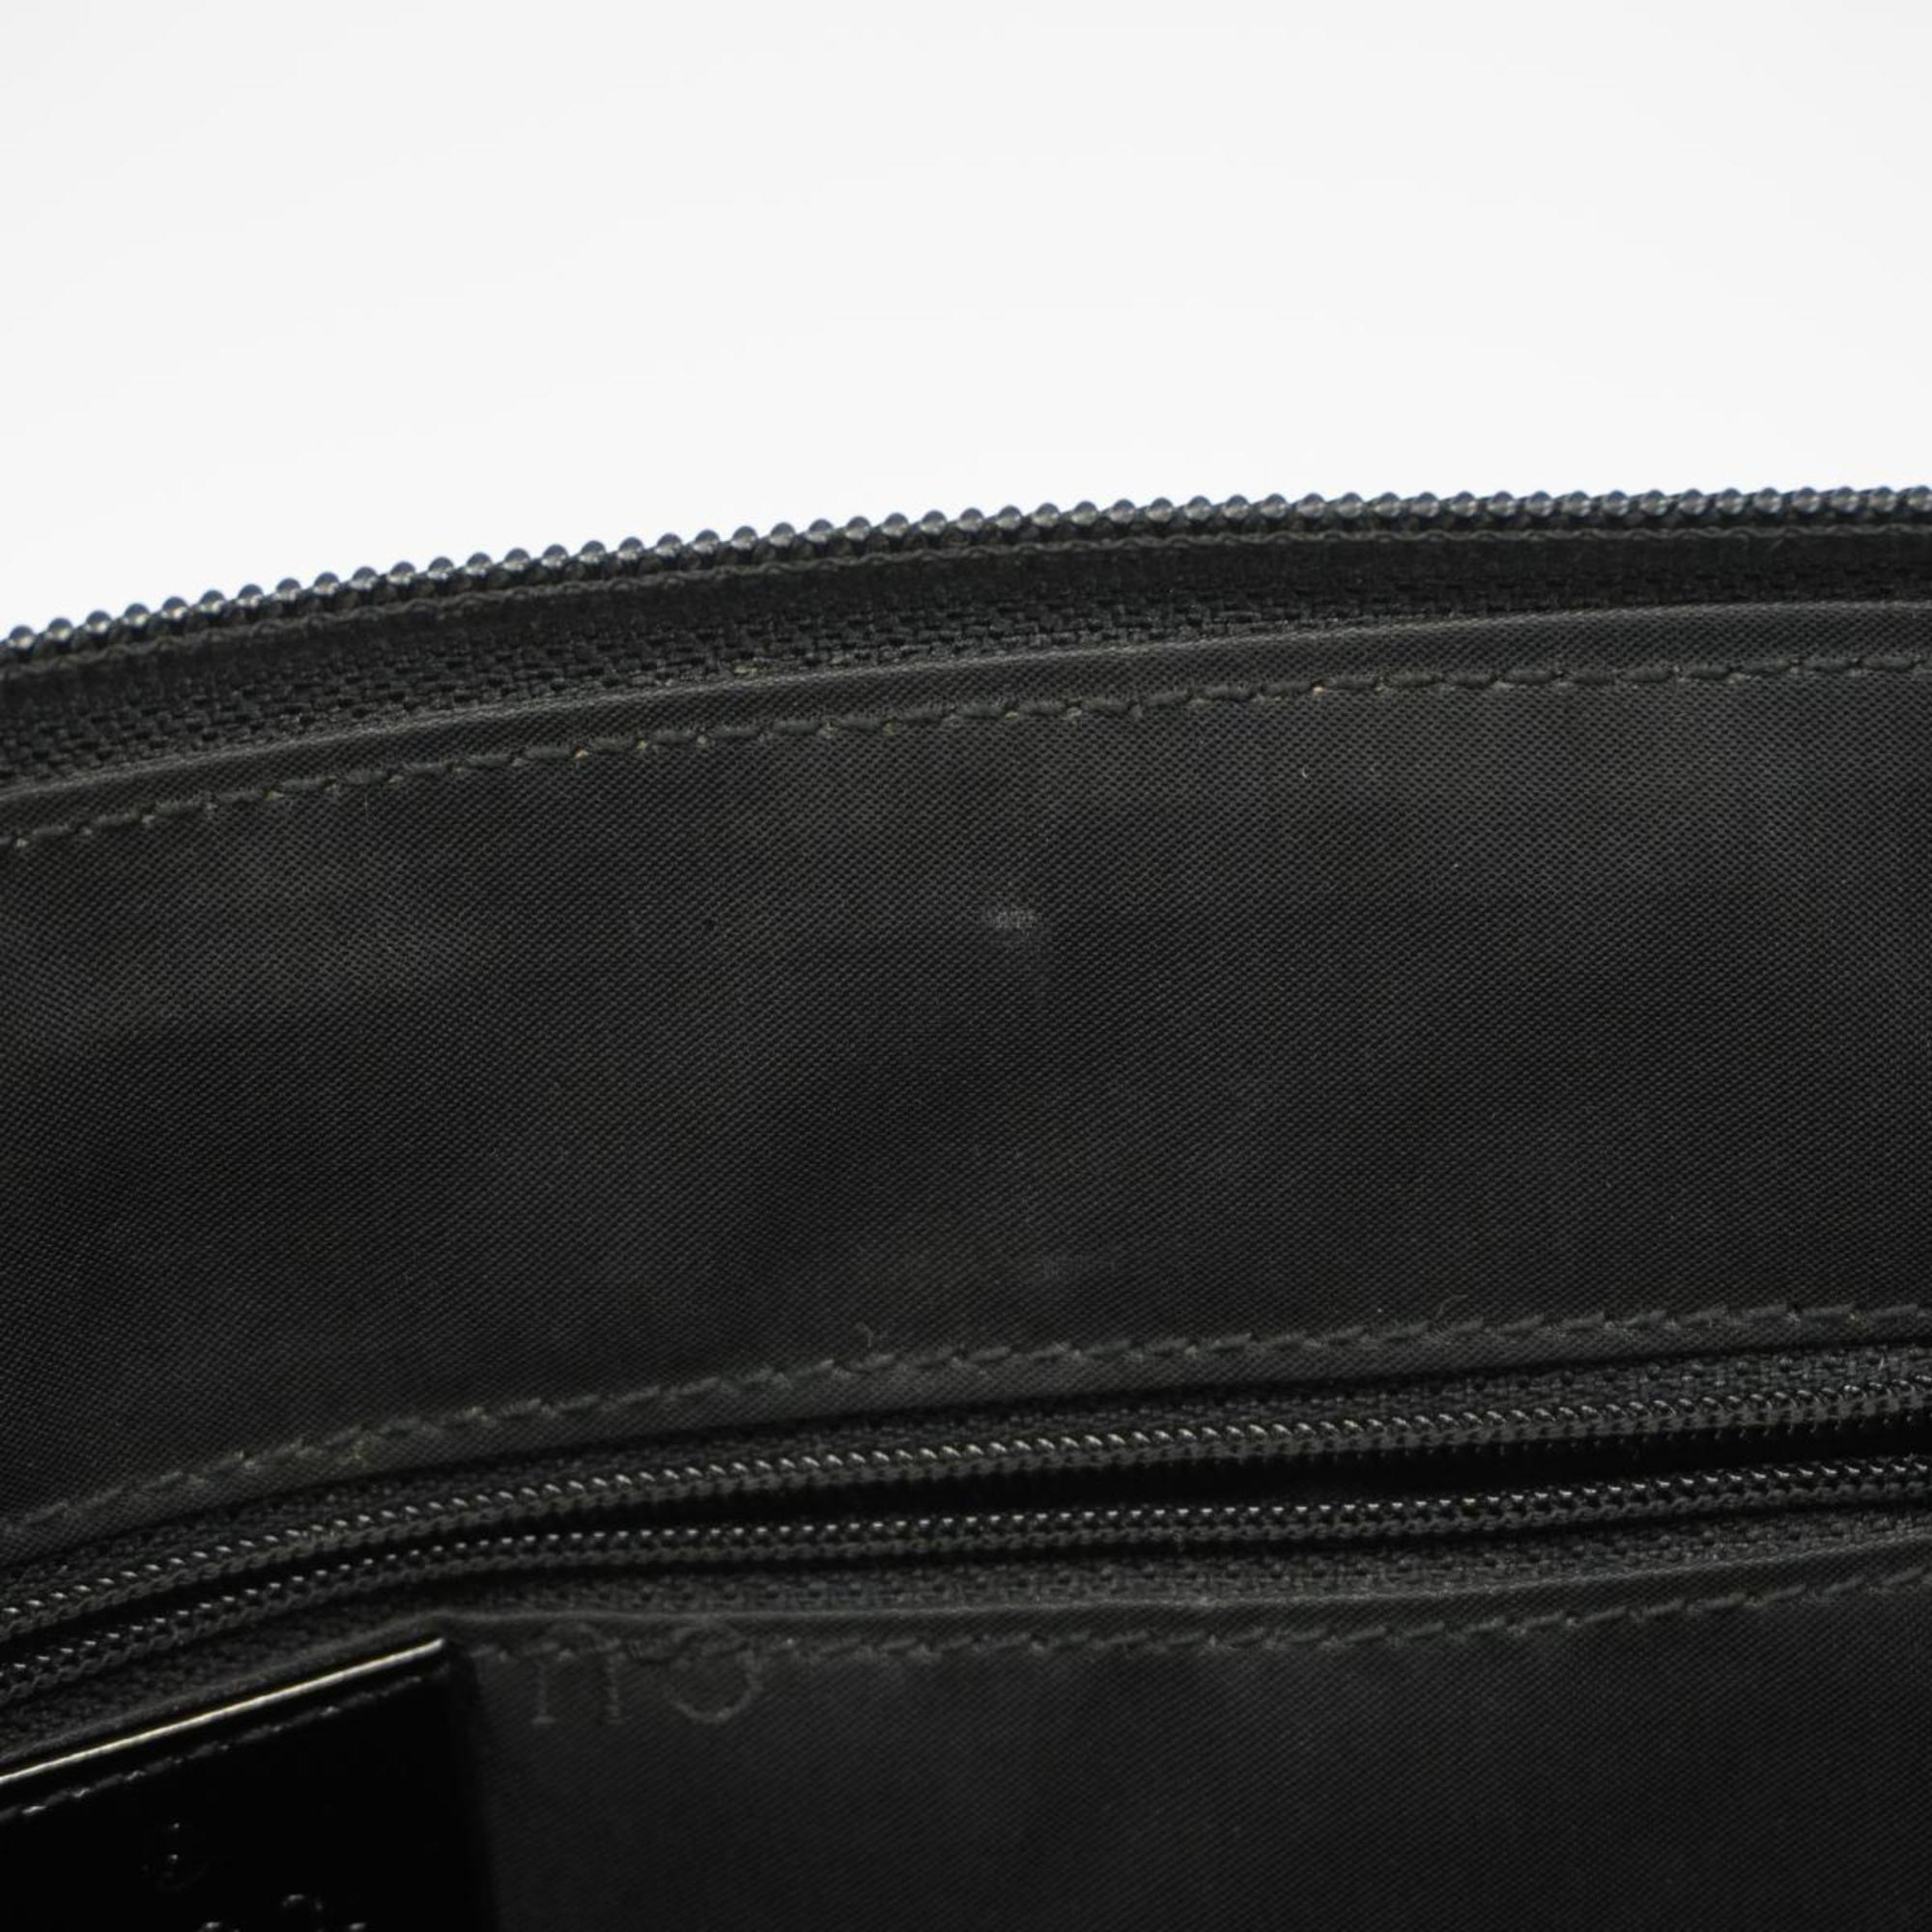 Gucci Shoulder Bag 002 1038 Nylon Black Women's